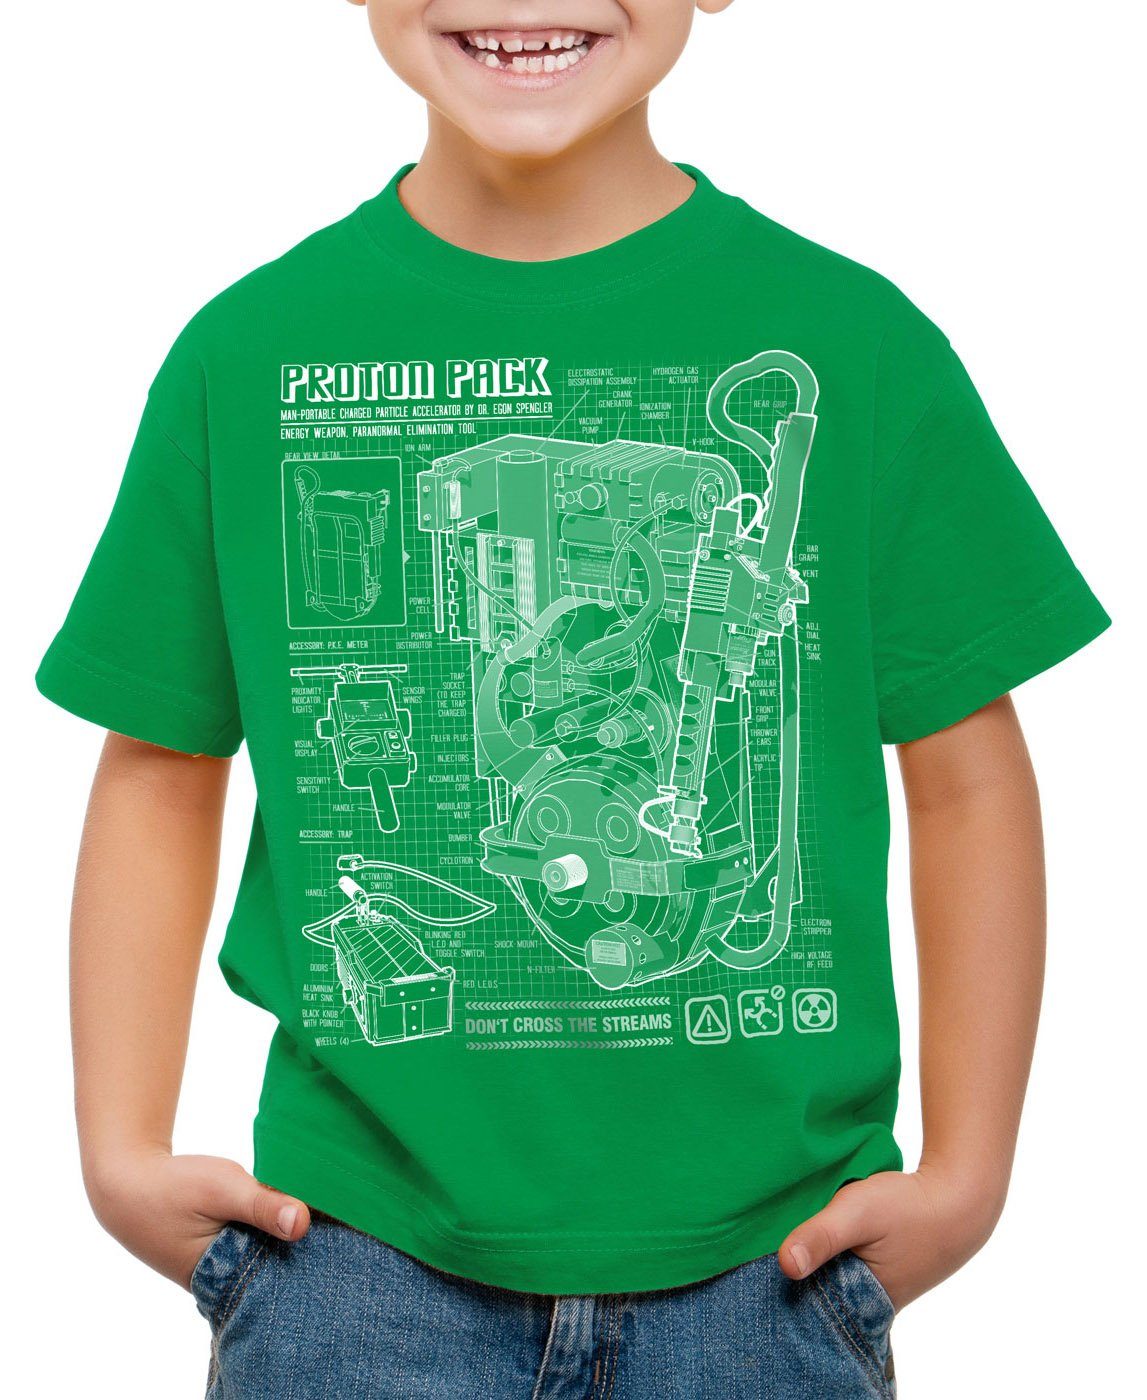 T-Shirt Kinder Print-Shirt grün pack Protonenstrahler style3 Blaupause Geisterjäger proton